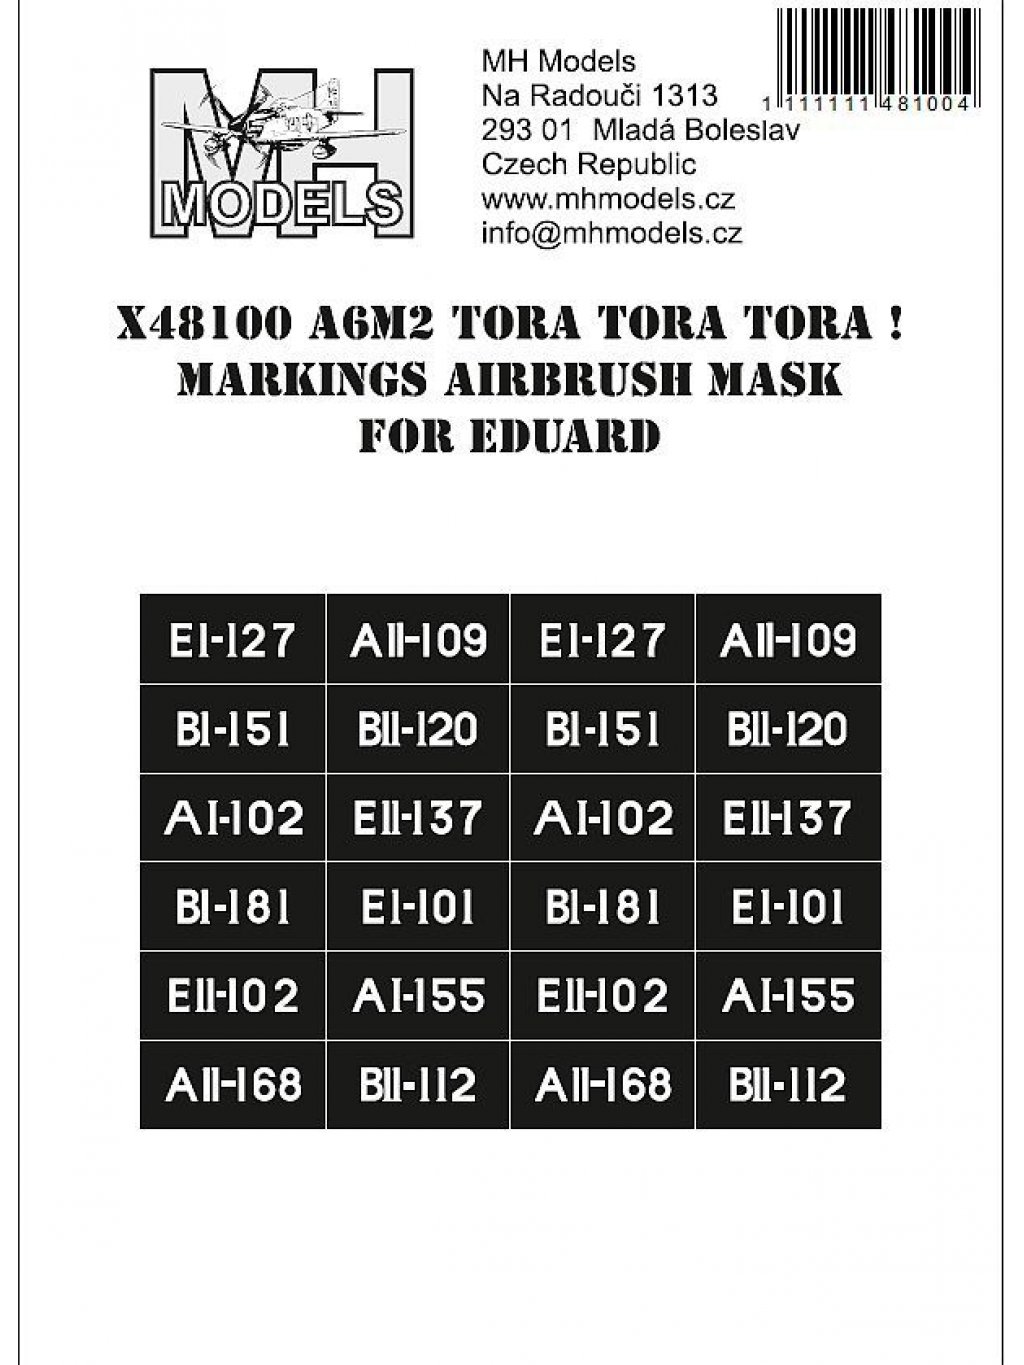 A6M2 Tora Tora Tora! Markings airbrush mask for Eduard